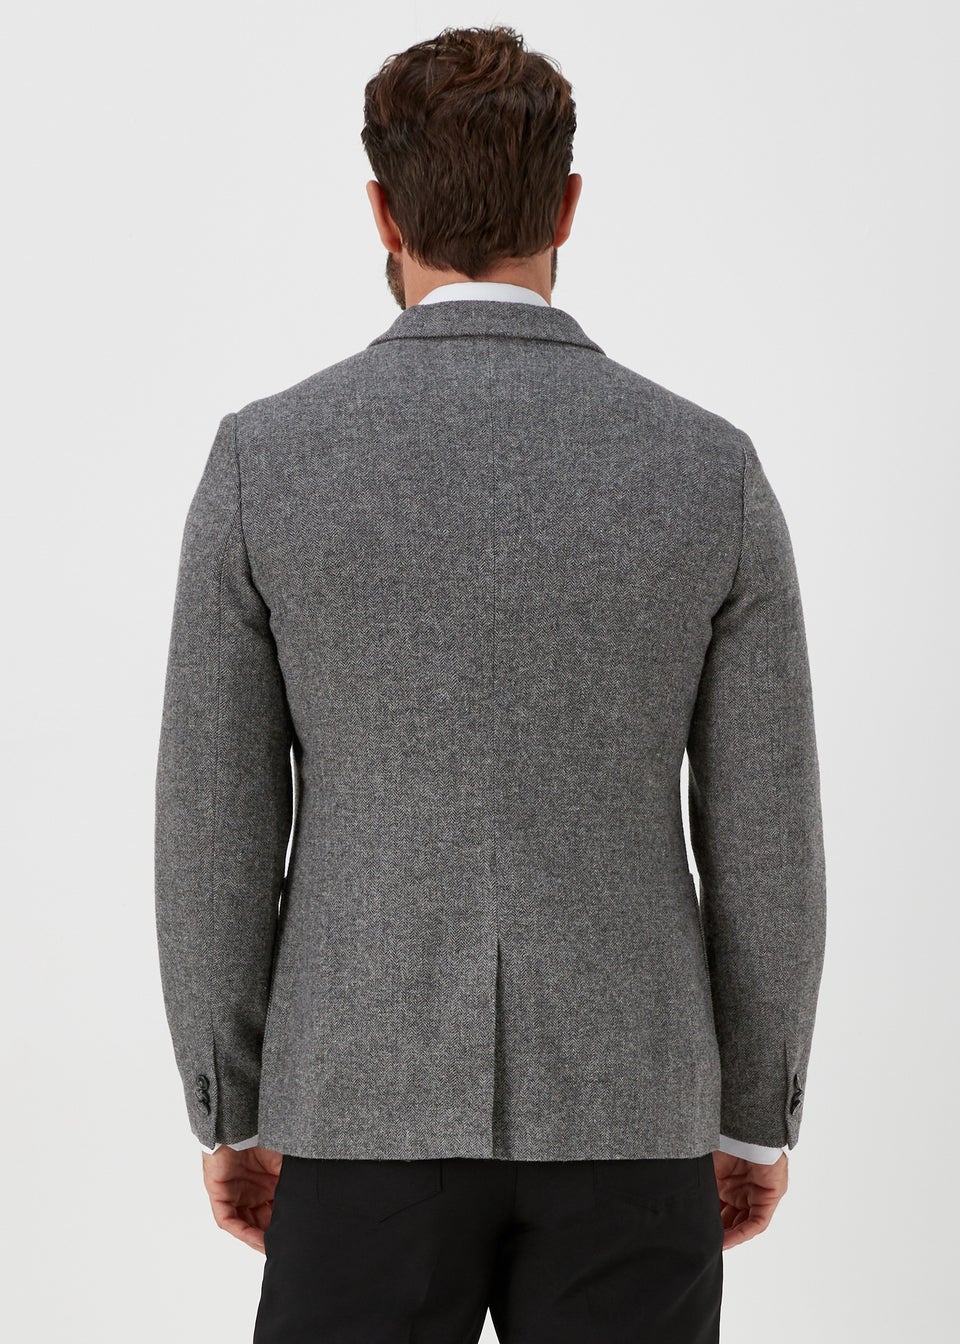 Men's Grey Suits | Charcoal Suits for Men – Matalan